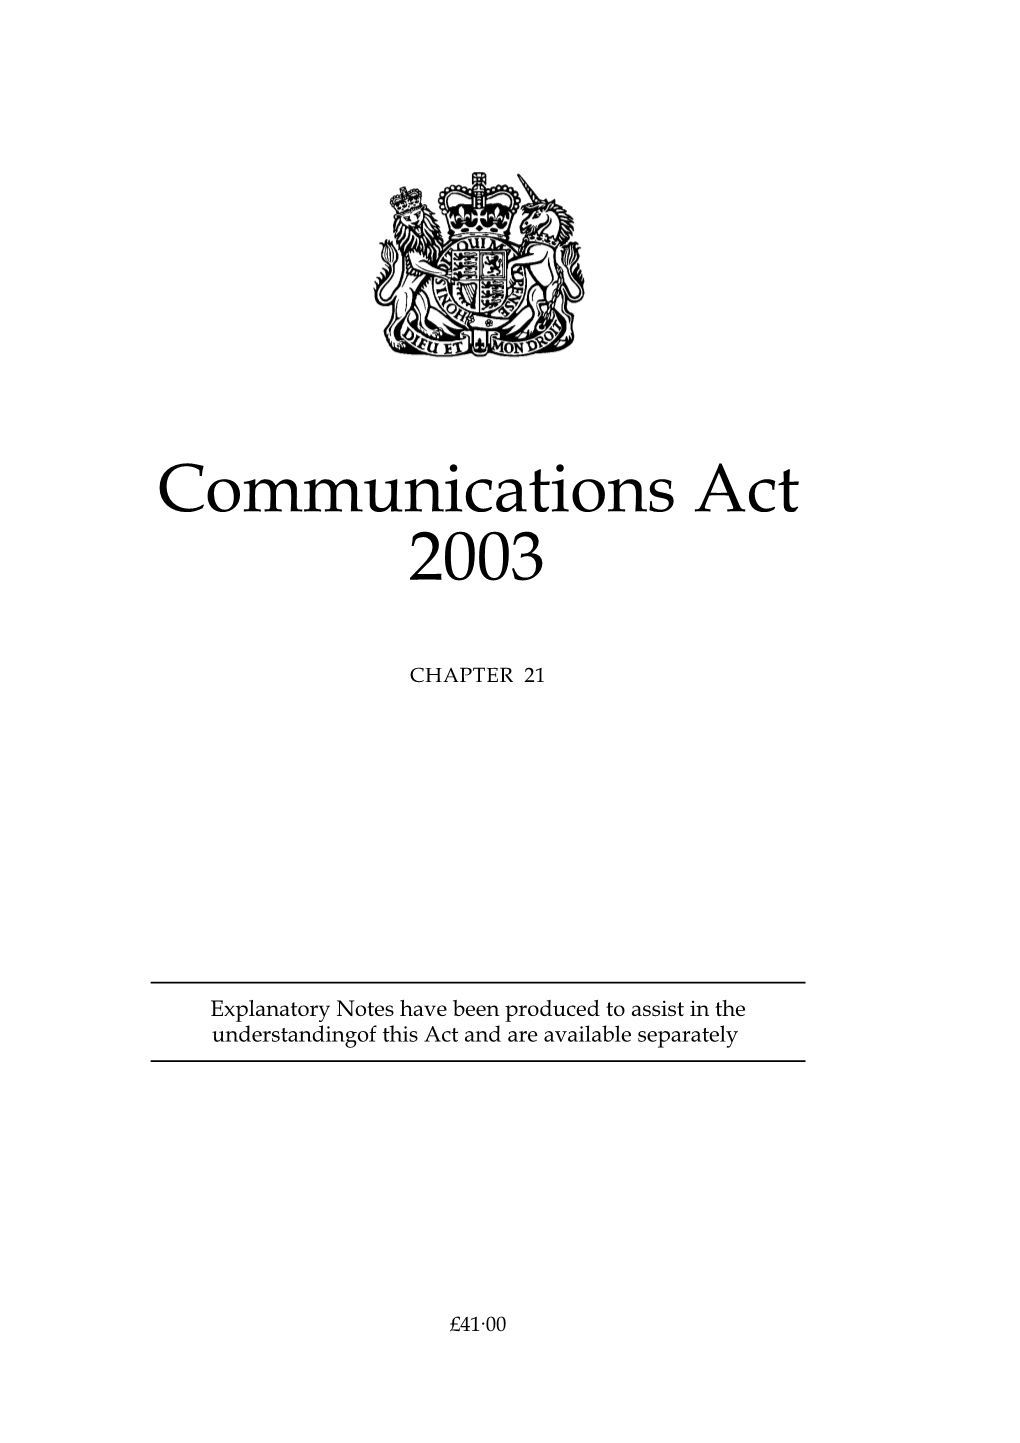 Communications Act 2003